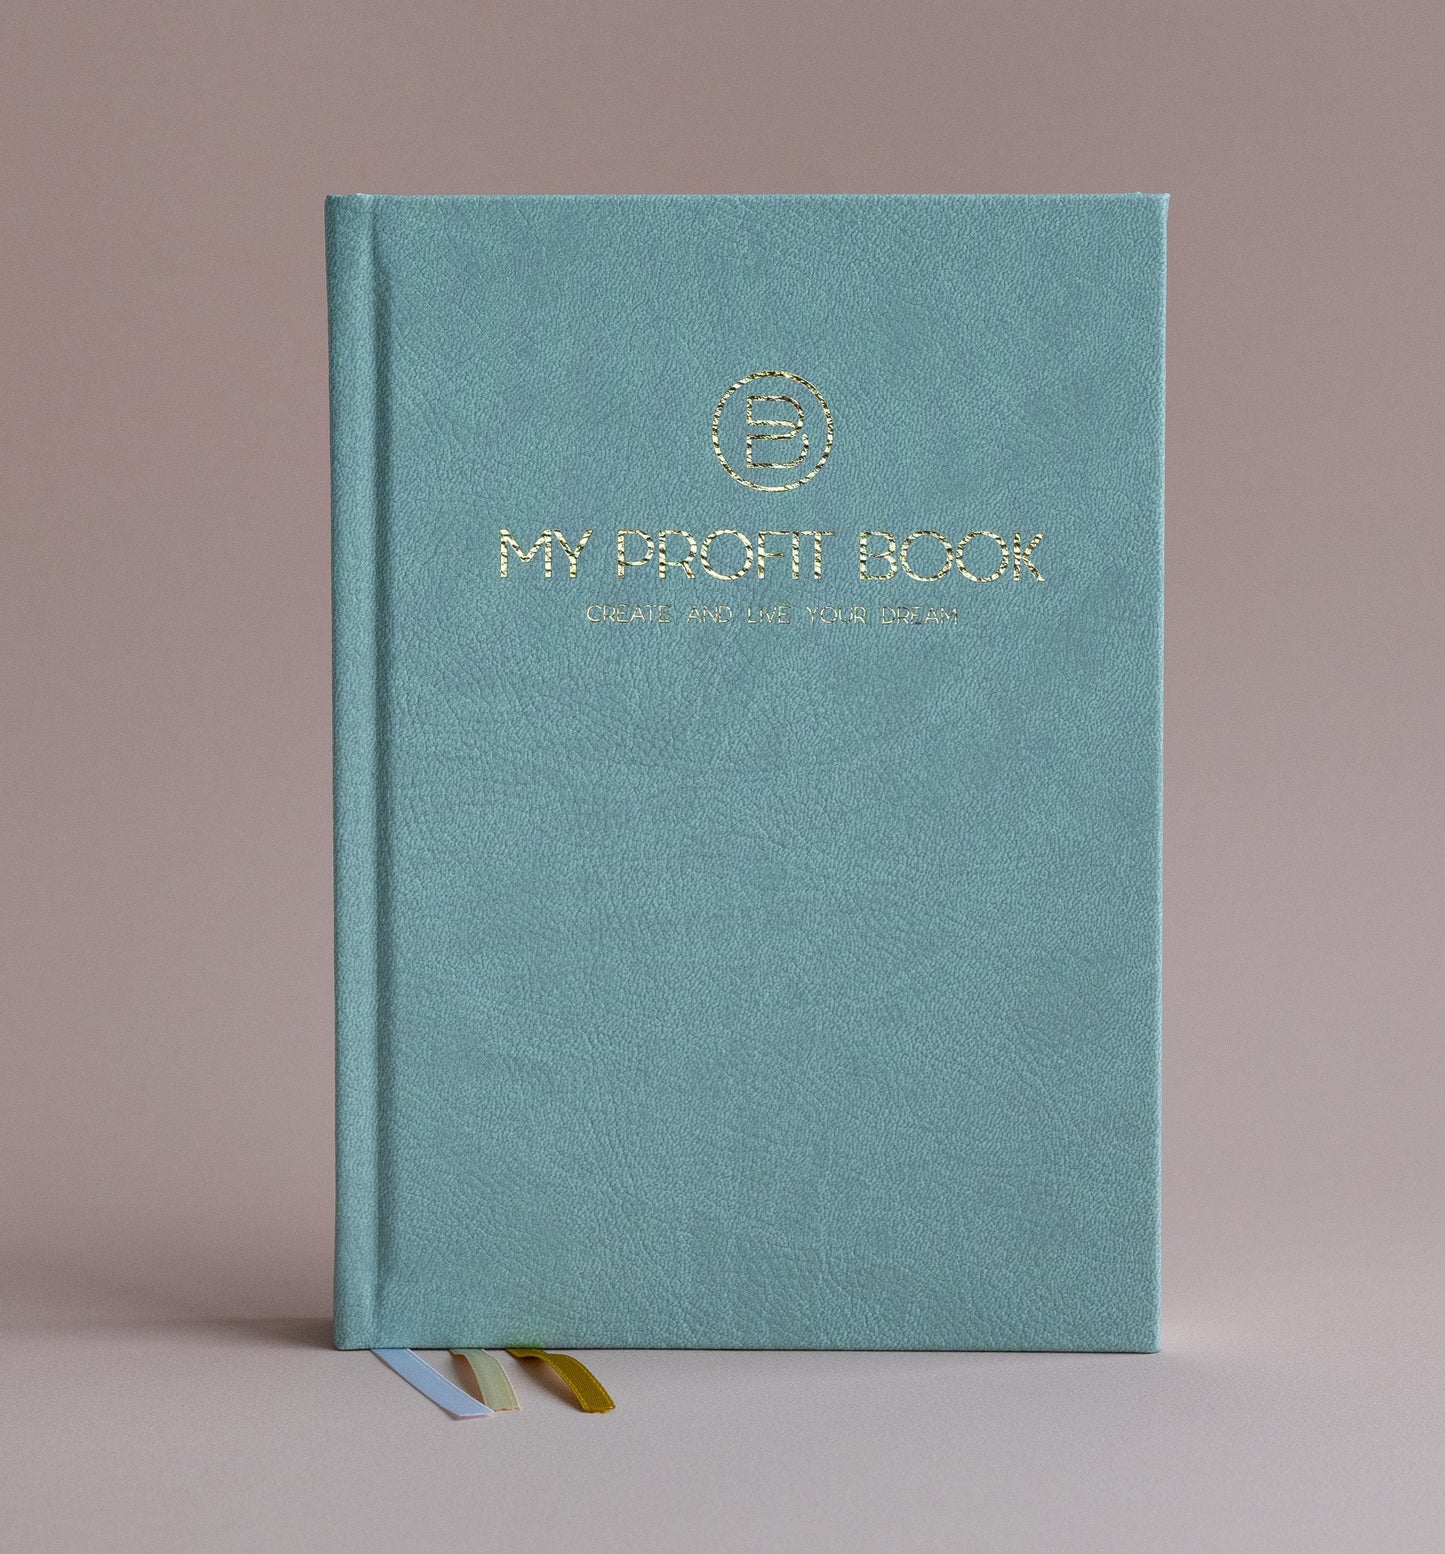 MyProfitBook - Mint Lagoon Planner